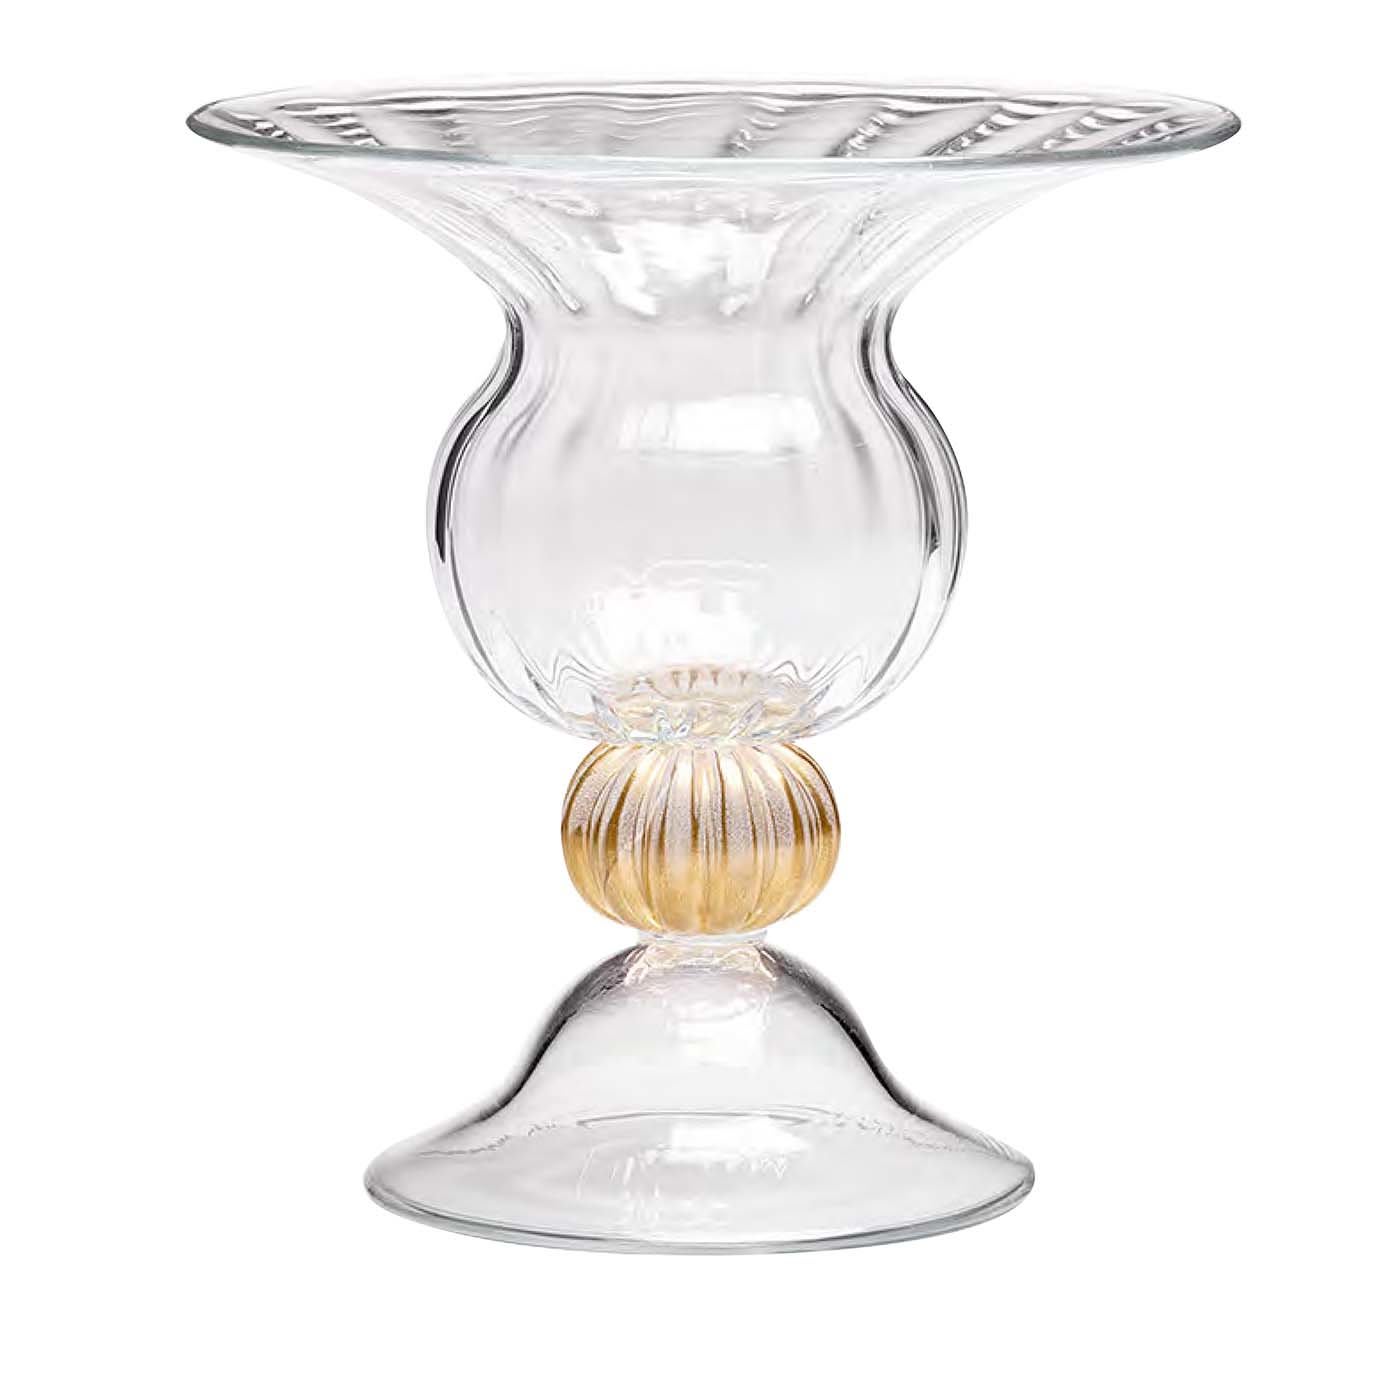 Berenice Small Vase Centerpiece - 24k Gold Leaf - Mara Dal Cin for DFN